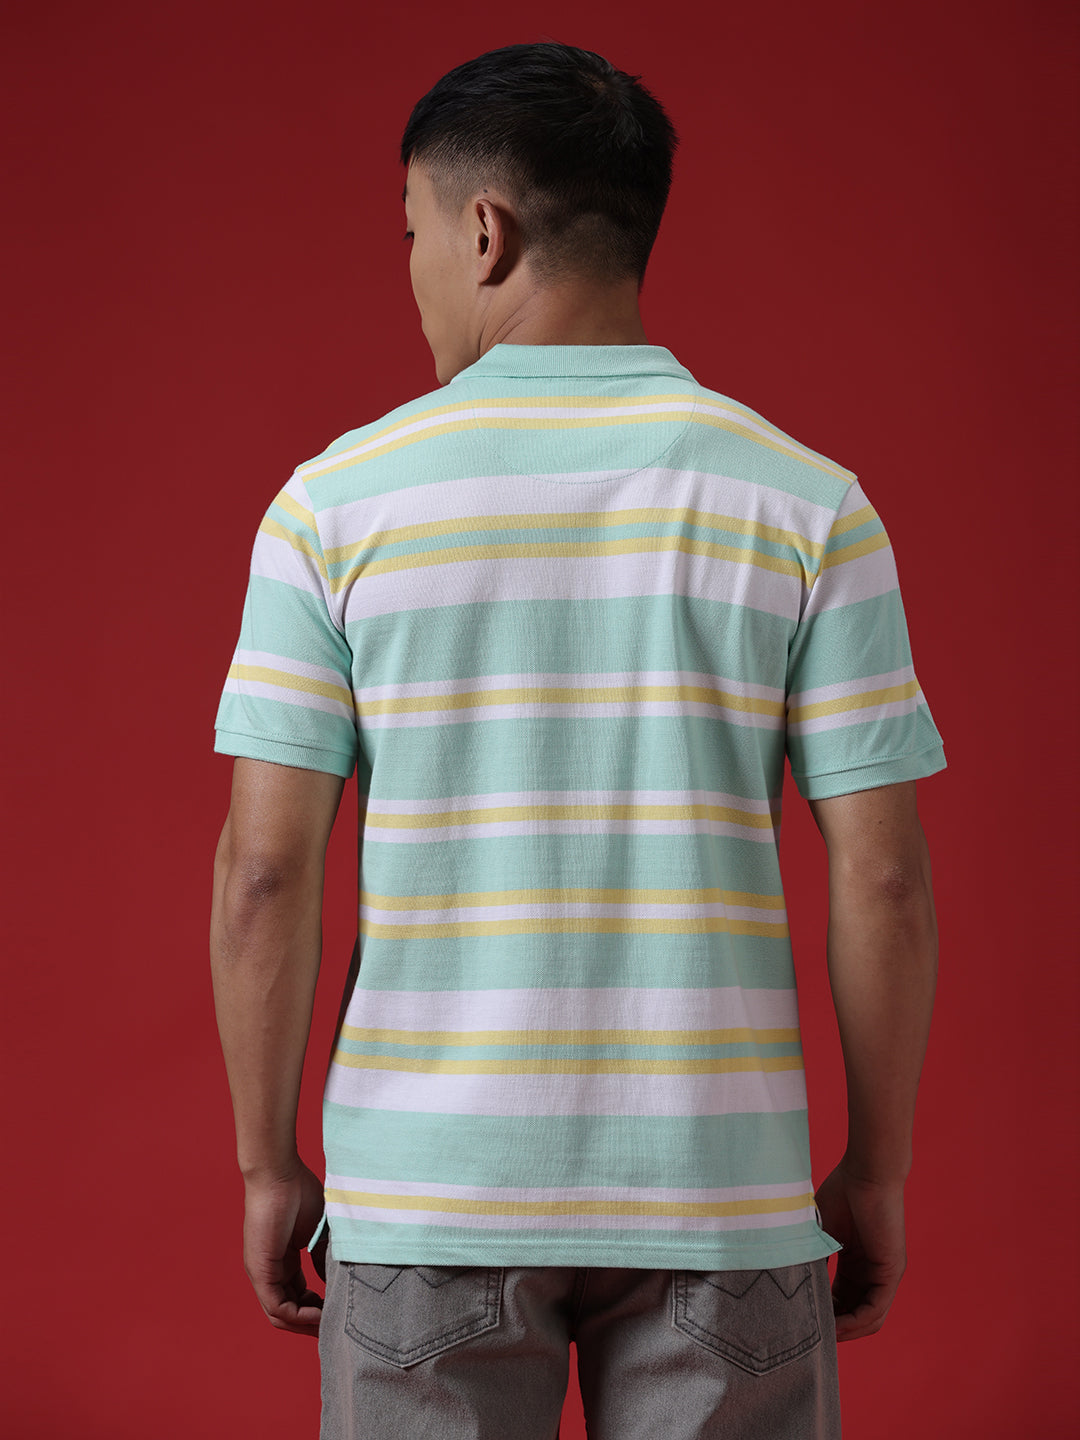 Mint Streaks Striped Polo T-Shirt